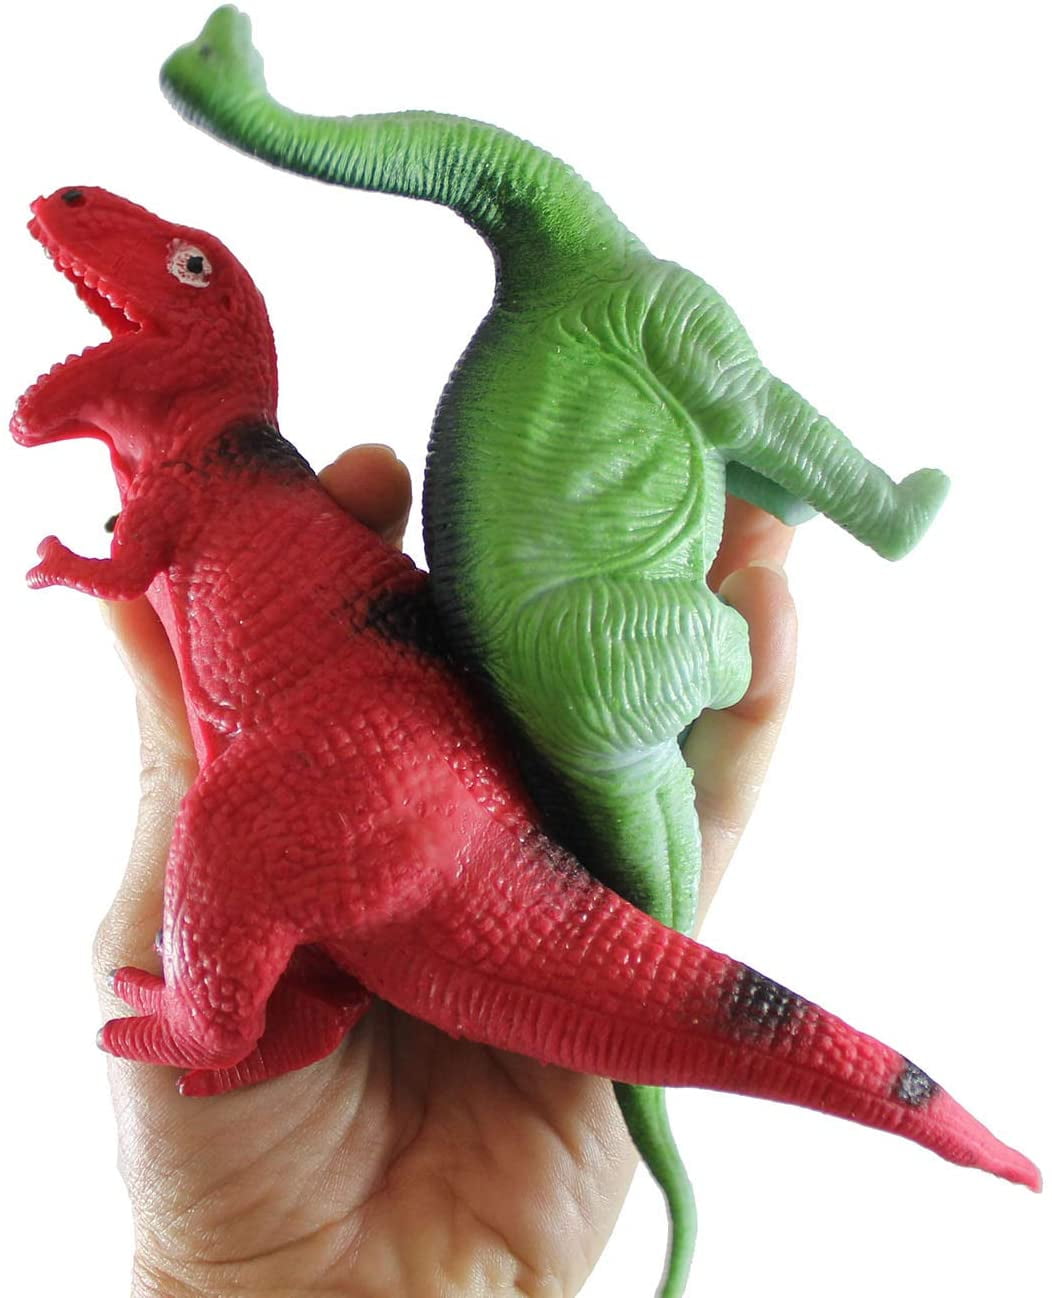 T-Rex Dinosaur Squishimal Stretchy Squishy Squeeze Fidget Toy Stress Ball 